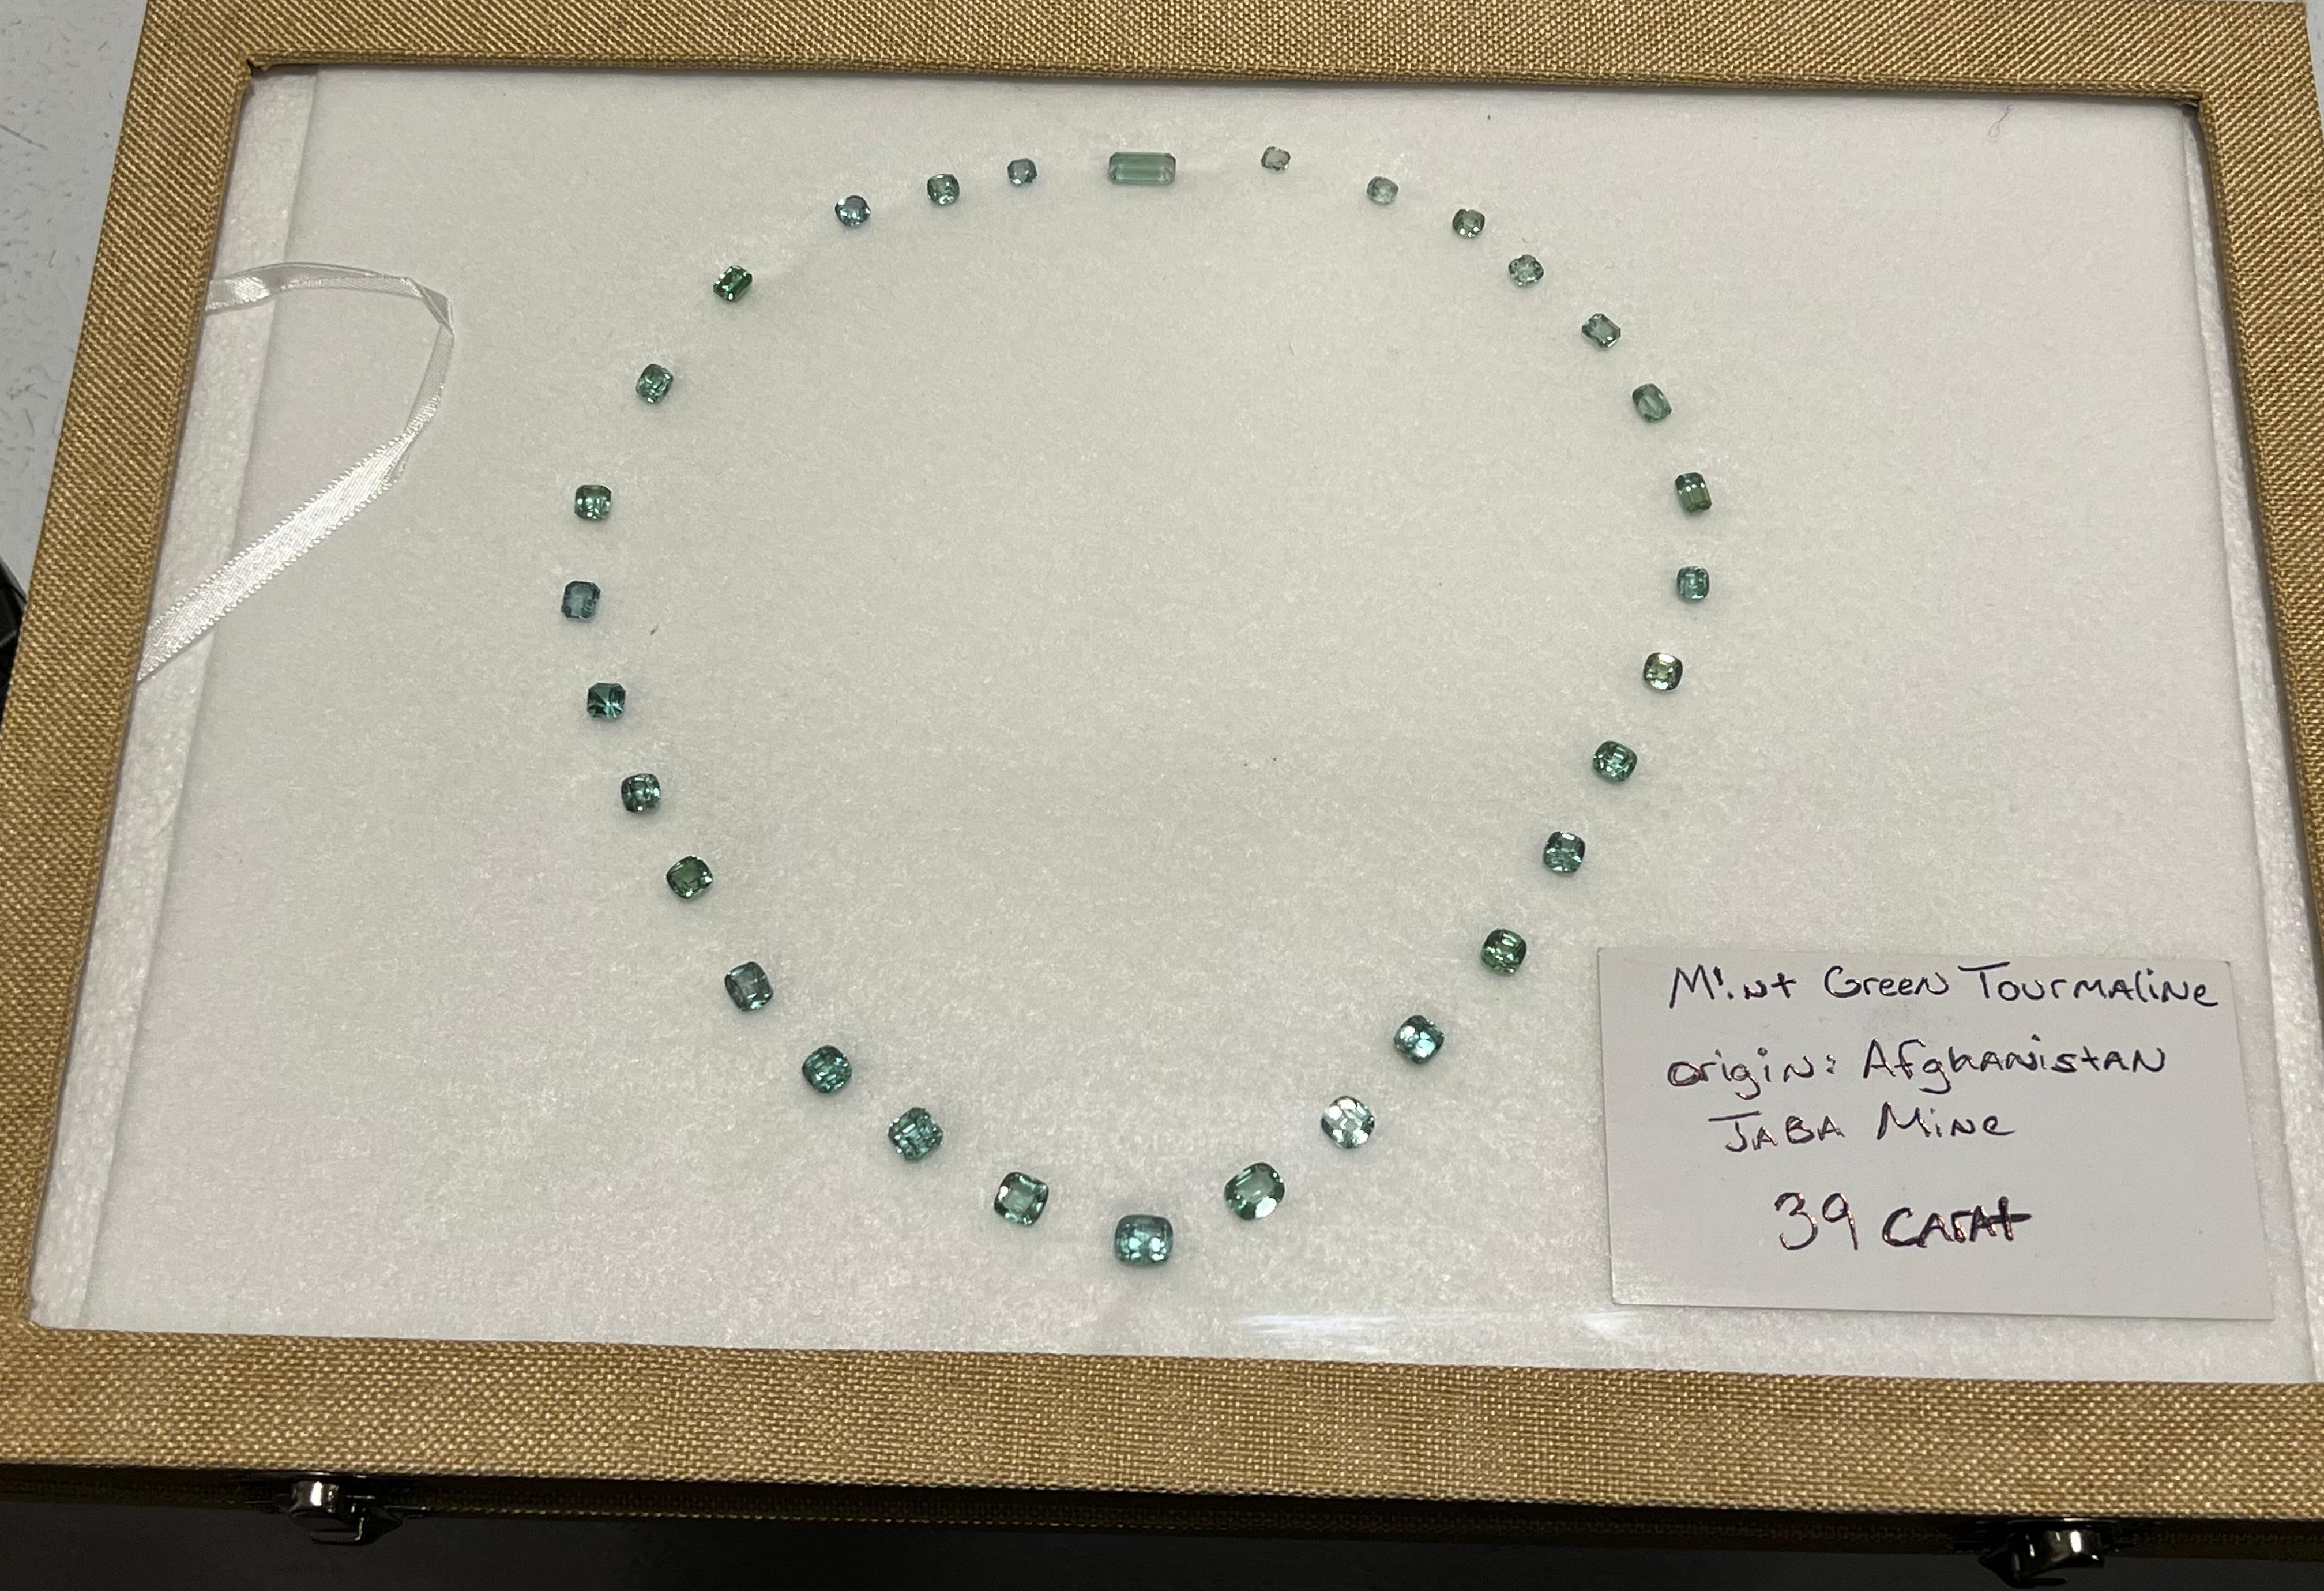 Cushion Cut 39 Carat Mint Green Tourmaline Gemstones for Necklace